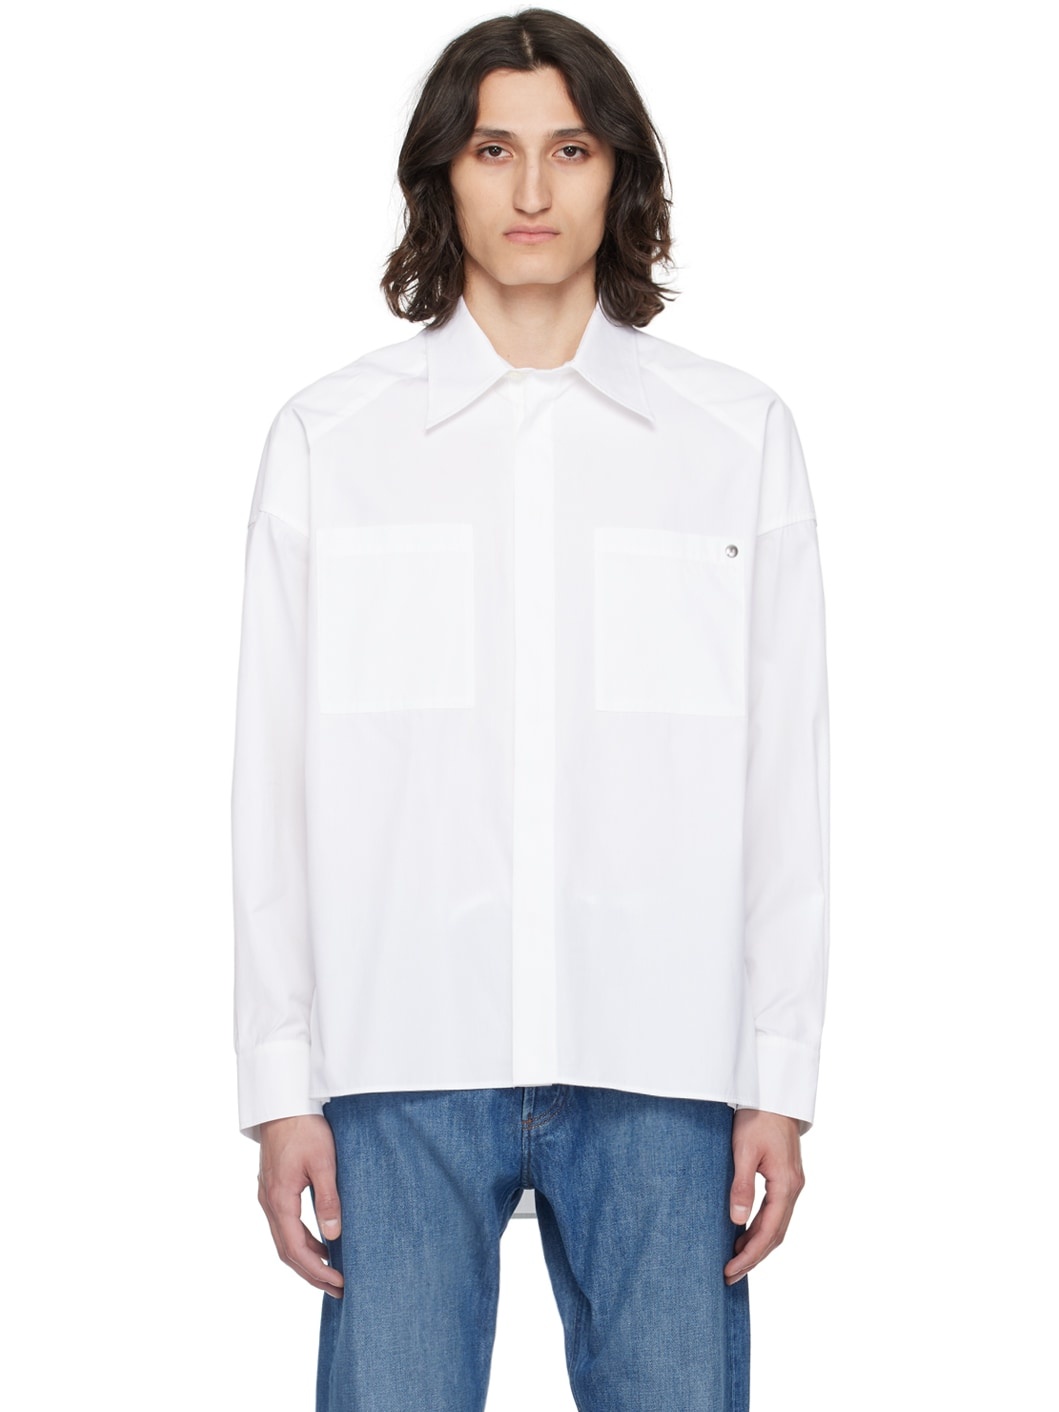 White Natacha Ramsay-Levi Edition Warvol Shirt - 1